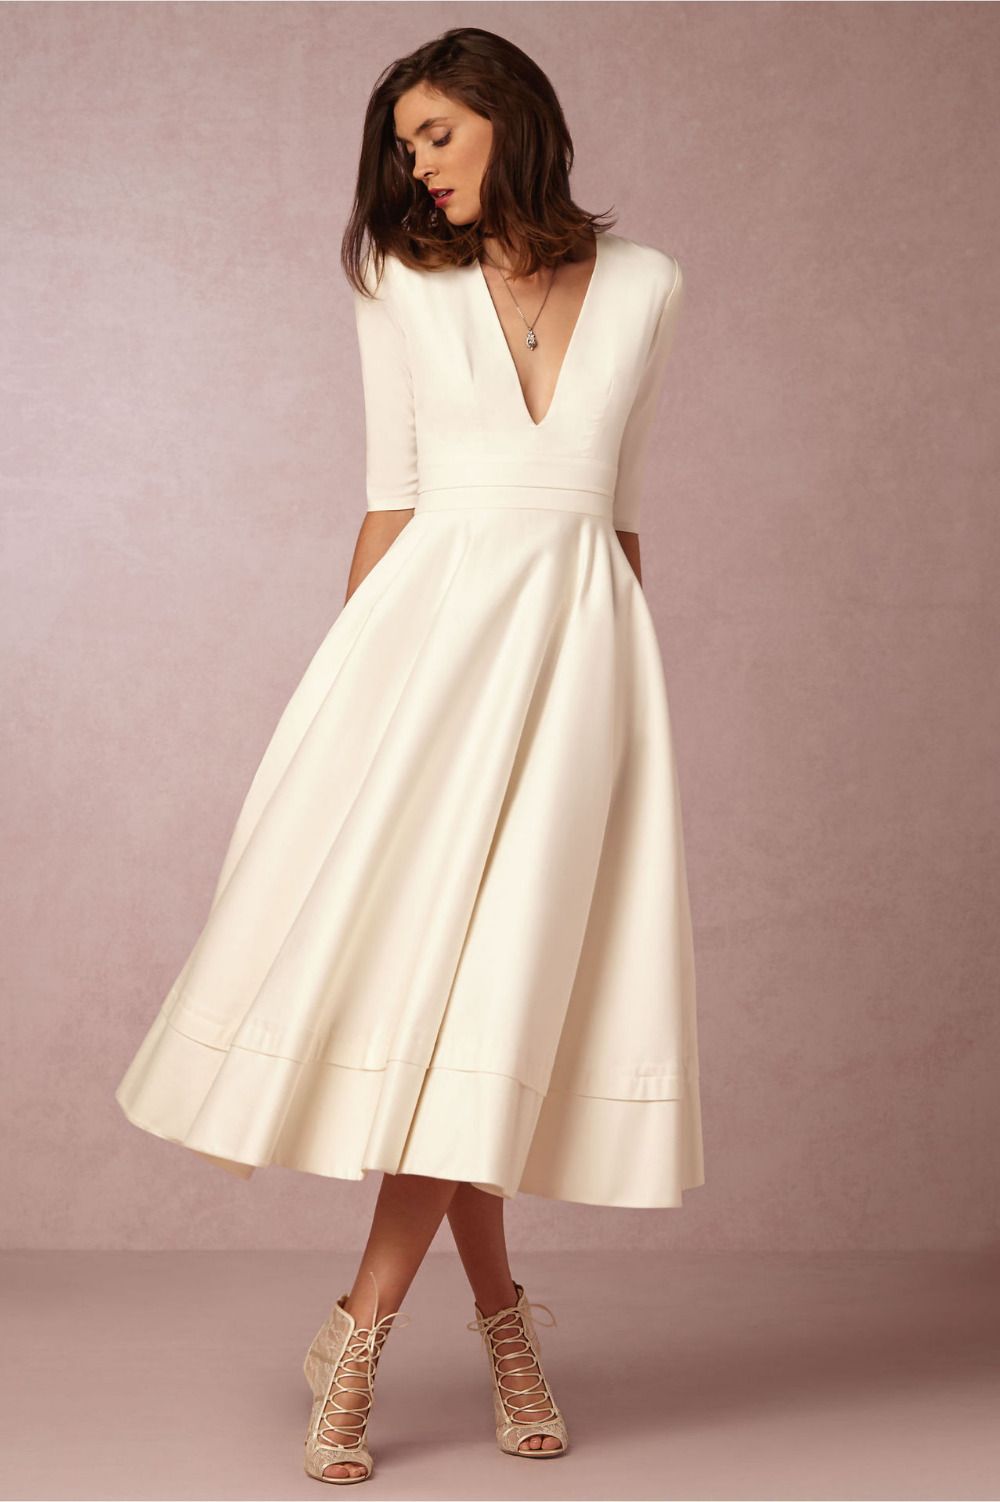 white fall dress